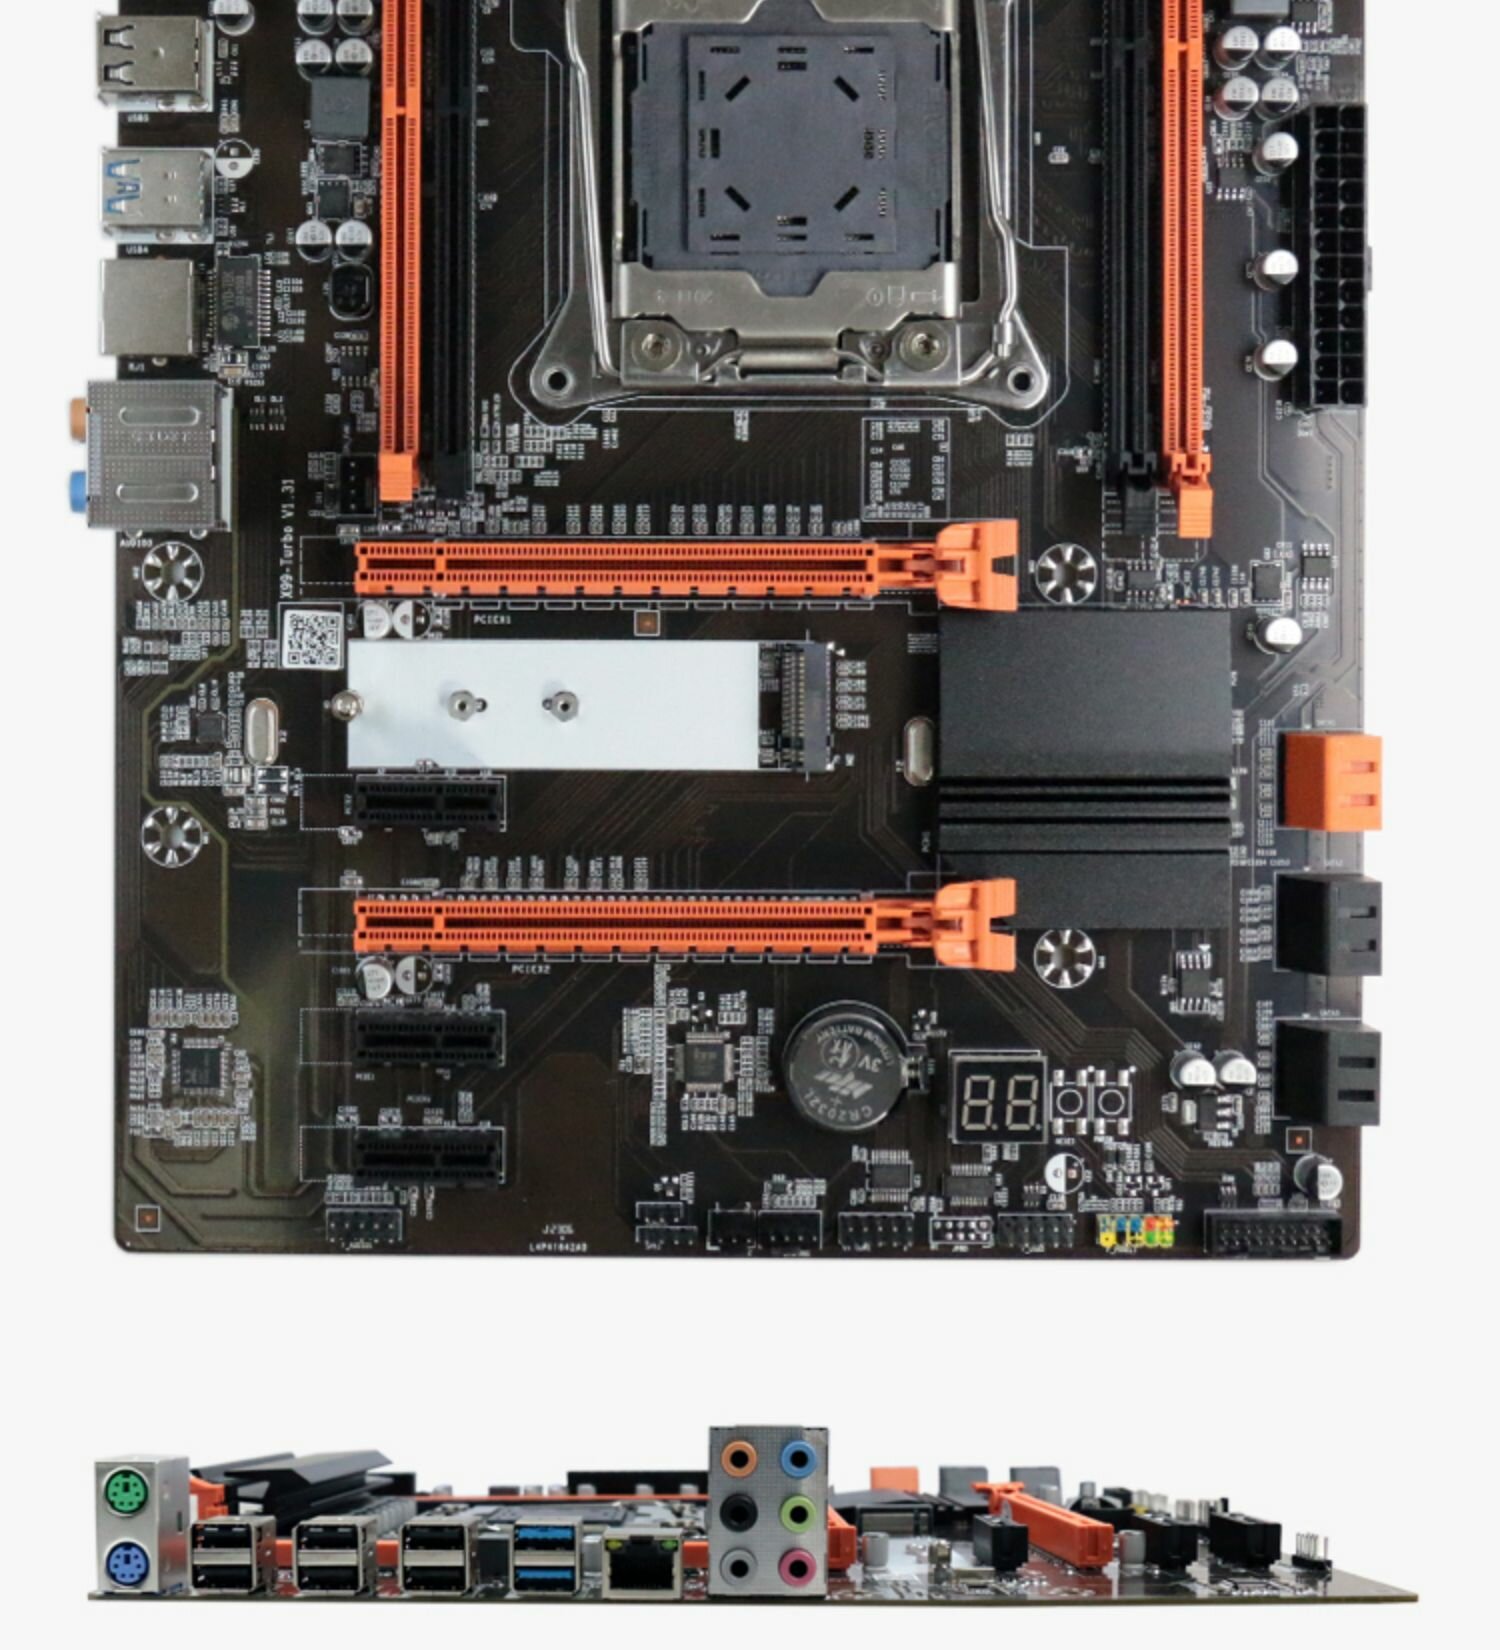 Комплект материнской платы: X99 Plus + Xeon E5 2683 v4 + DDR4 32Гб+Башенный кулер: 4 медные трубки AVC